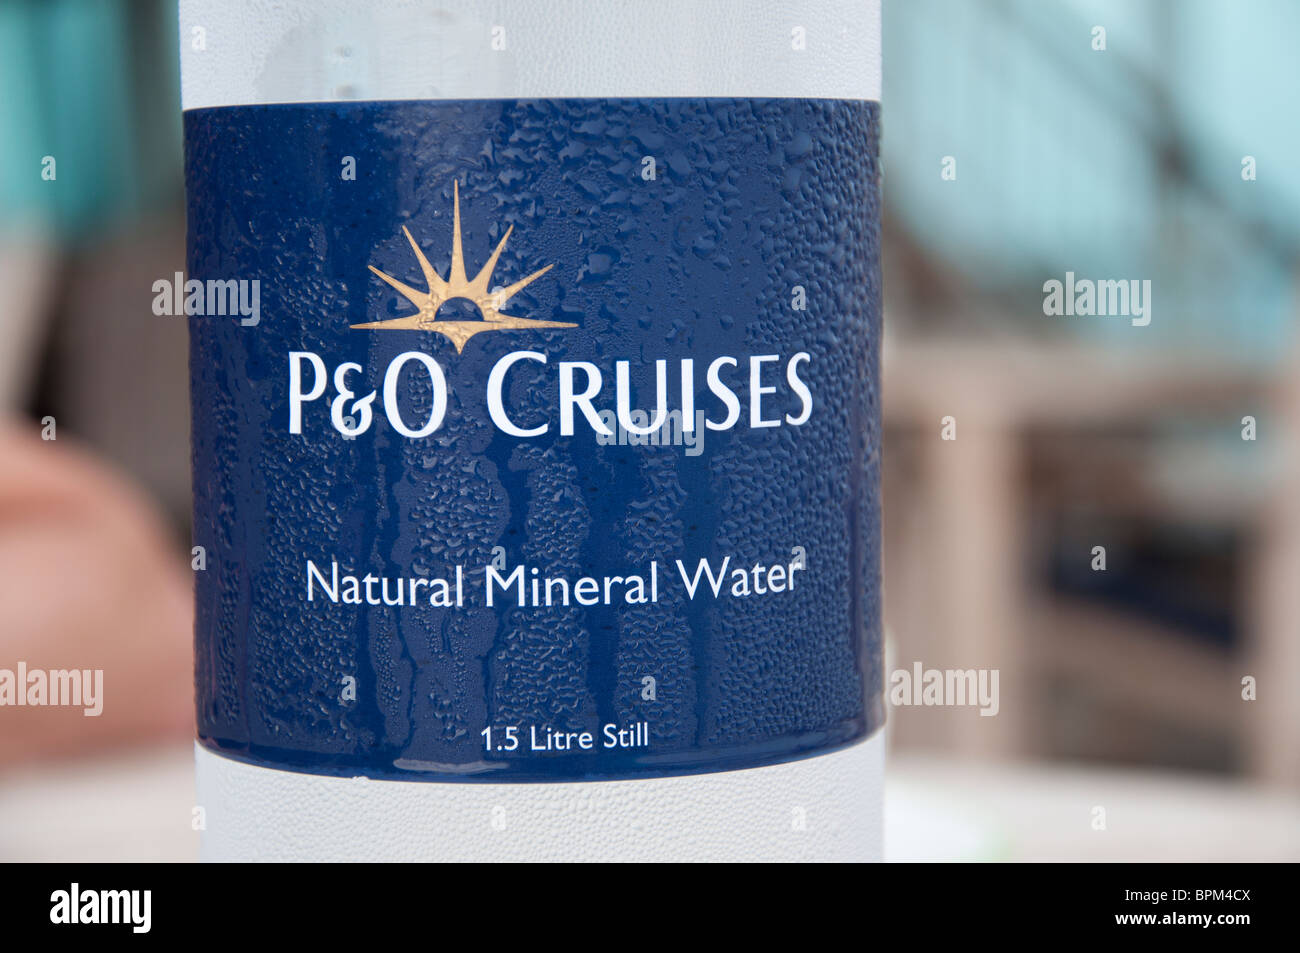 https://c8.alamy.com/comp/BPM4CX/a-close-up-photograph-of-a-po-cruises-still-mineral-water-bottle-label-BPM4CX.jpg